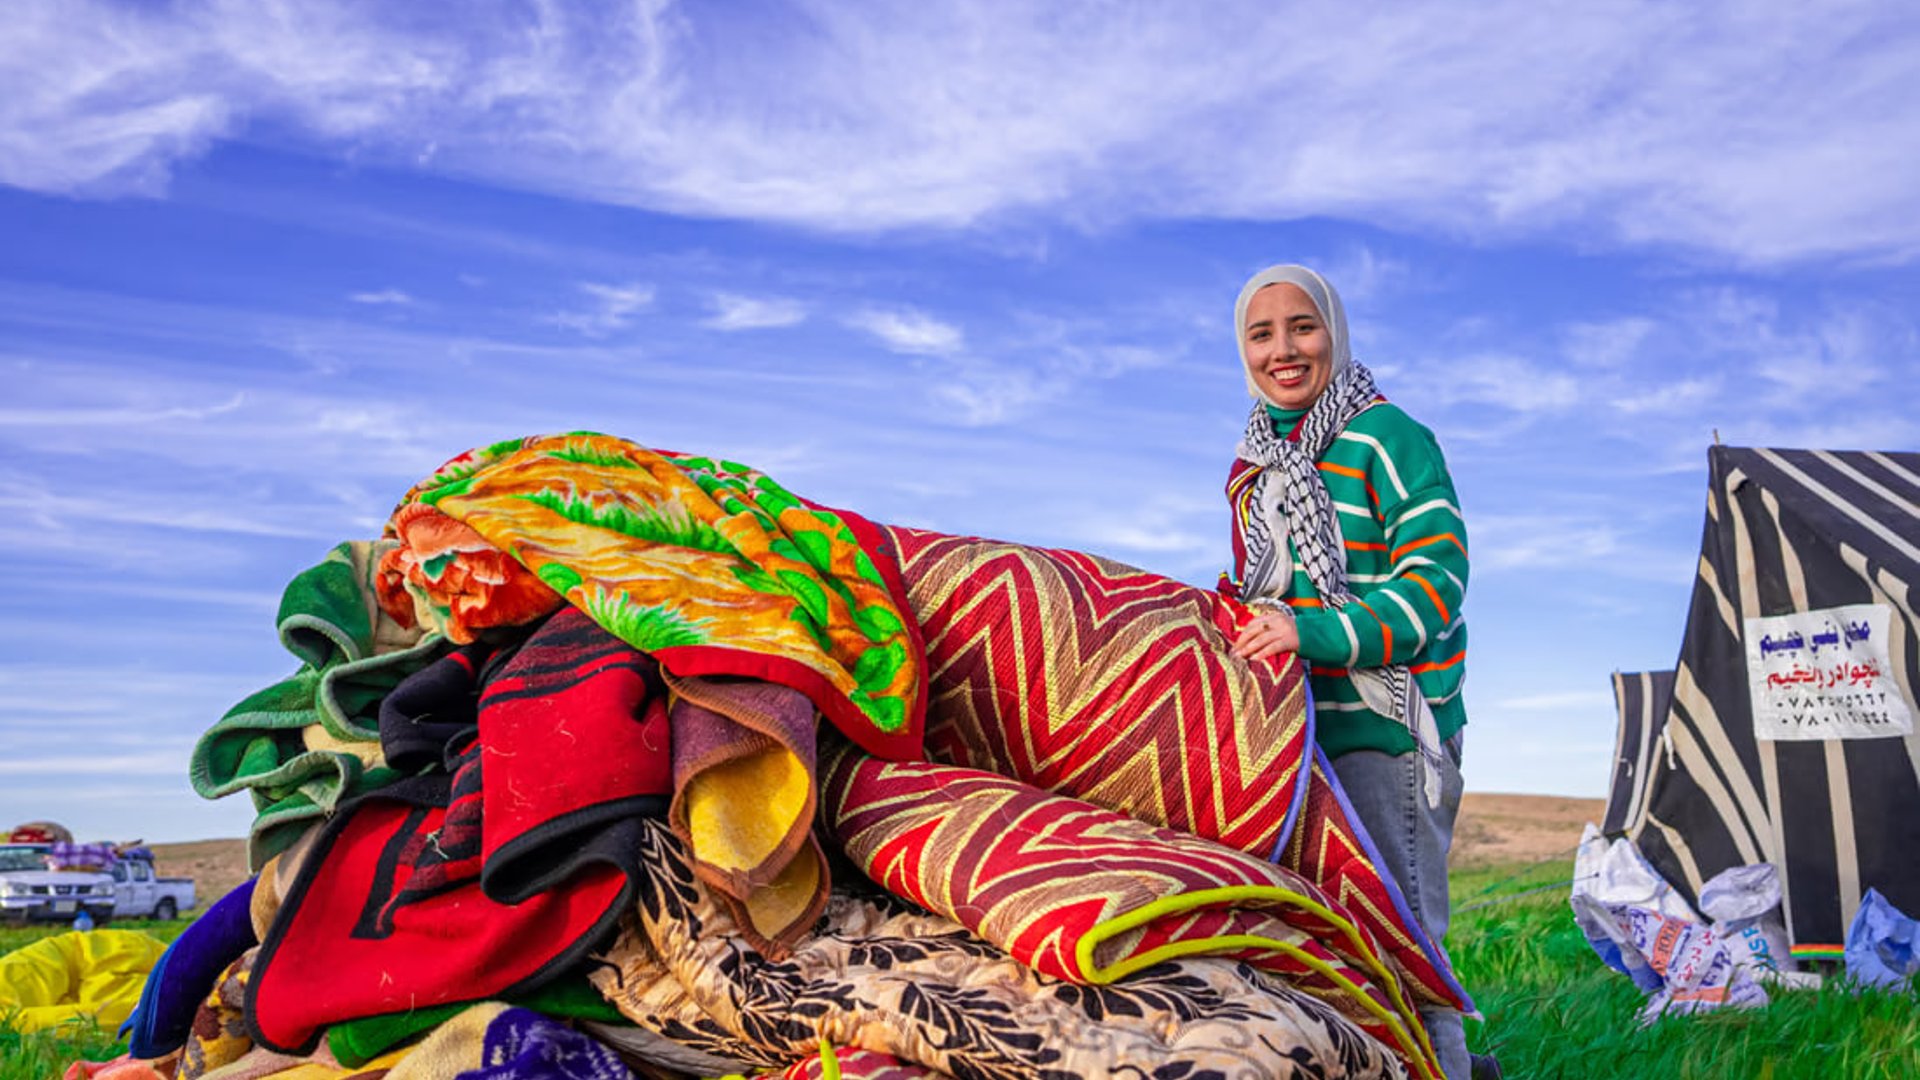 Volunteers organize ecofriendly camp in Samawah desert